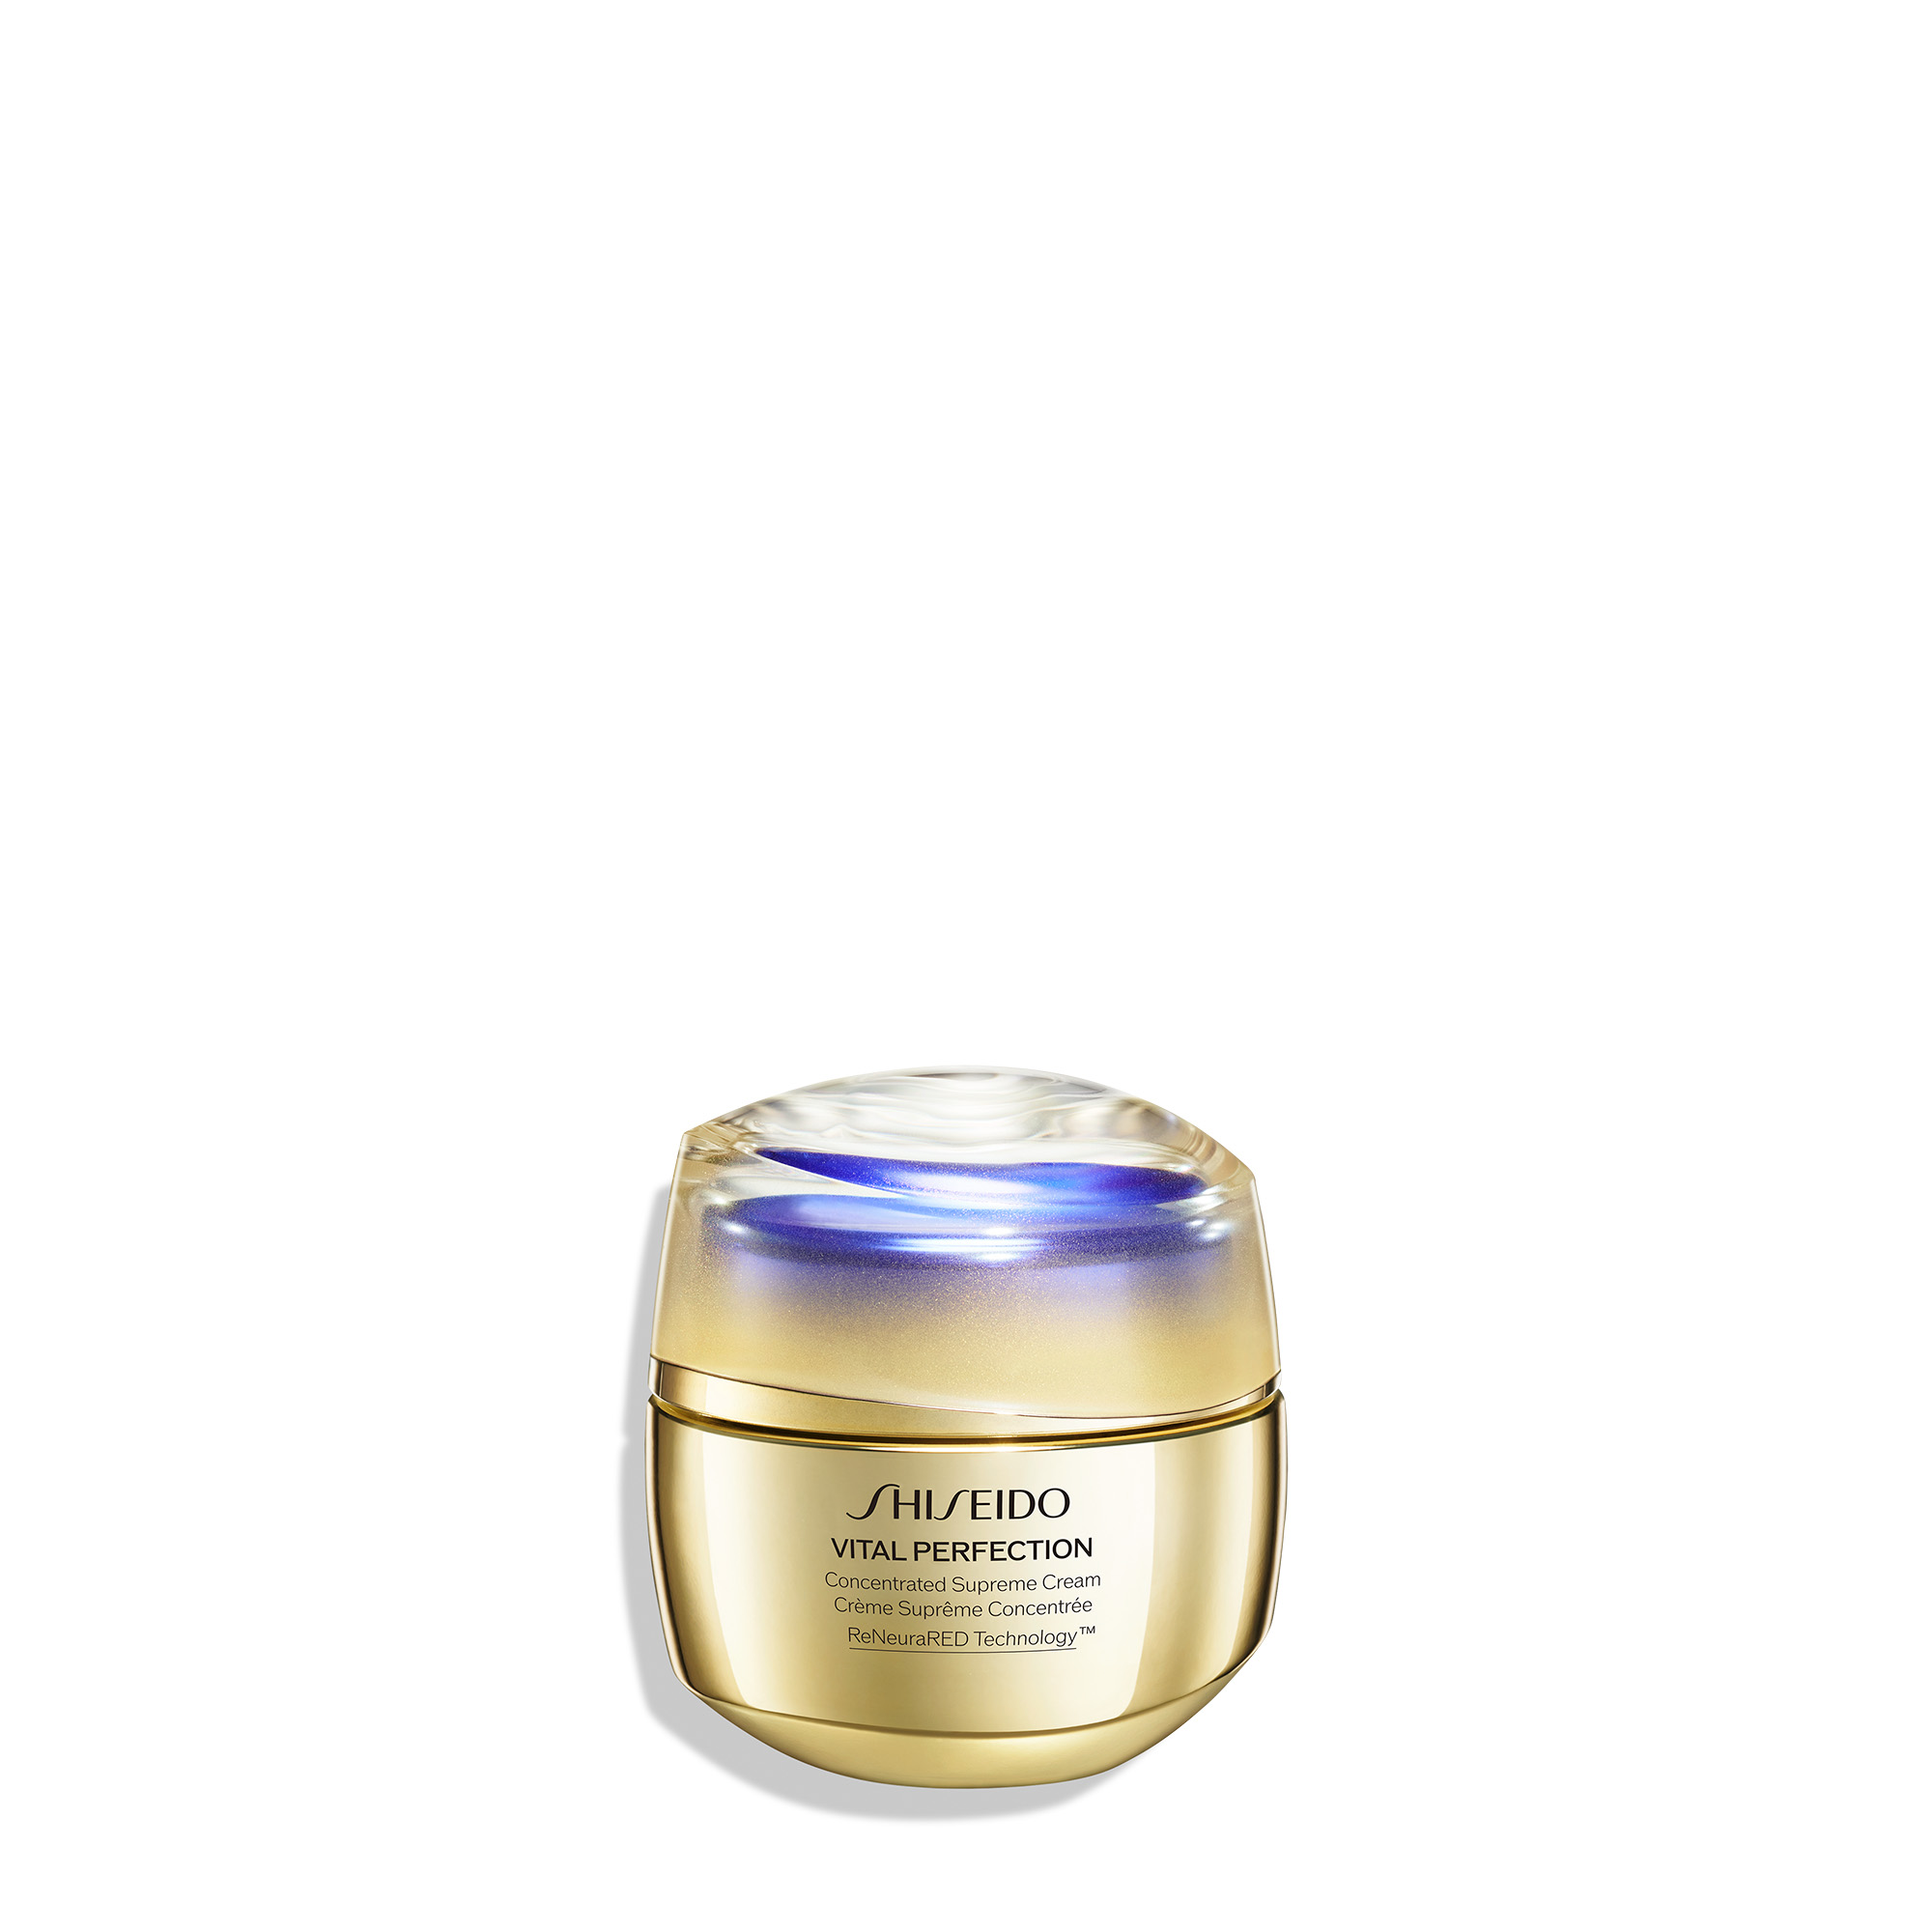 © Shiseido Vital Perfection Concentrated Supreme Cream